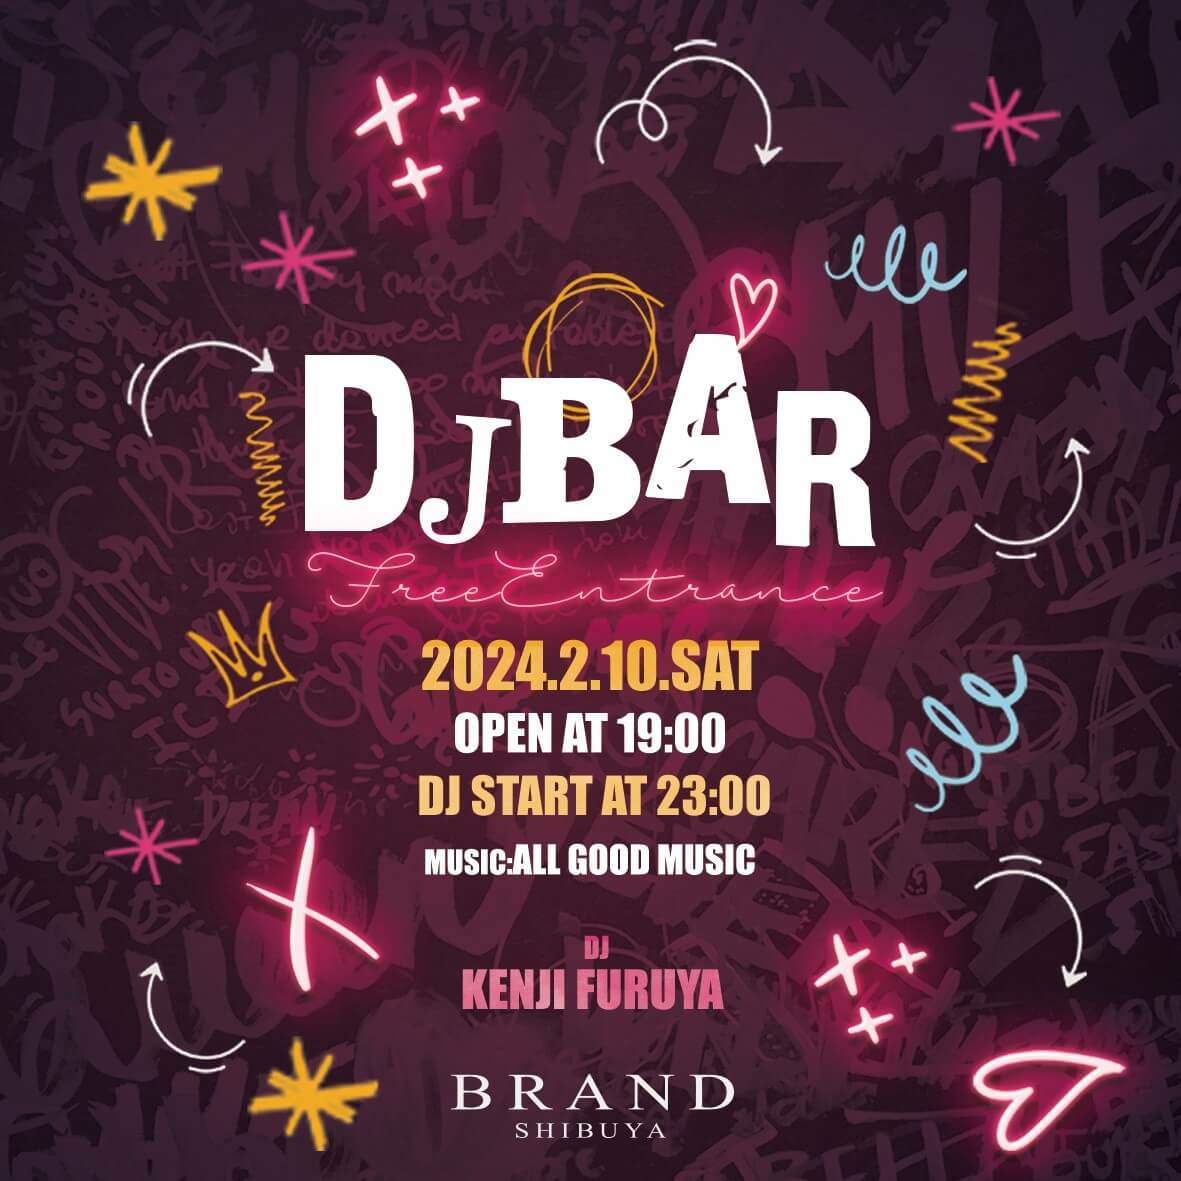 DJBAR 2024年02月10日（土曜日）に渋谷 クラブのBRAND SHIBUYAで開催されるALL MIXイベント